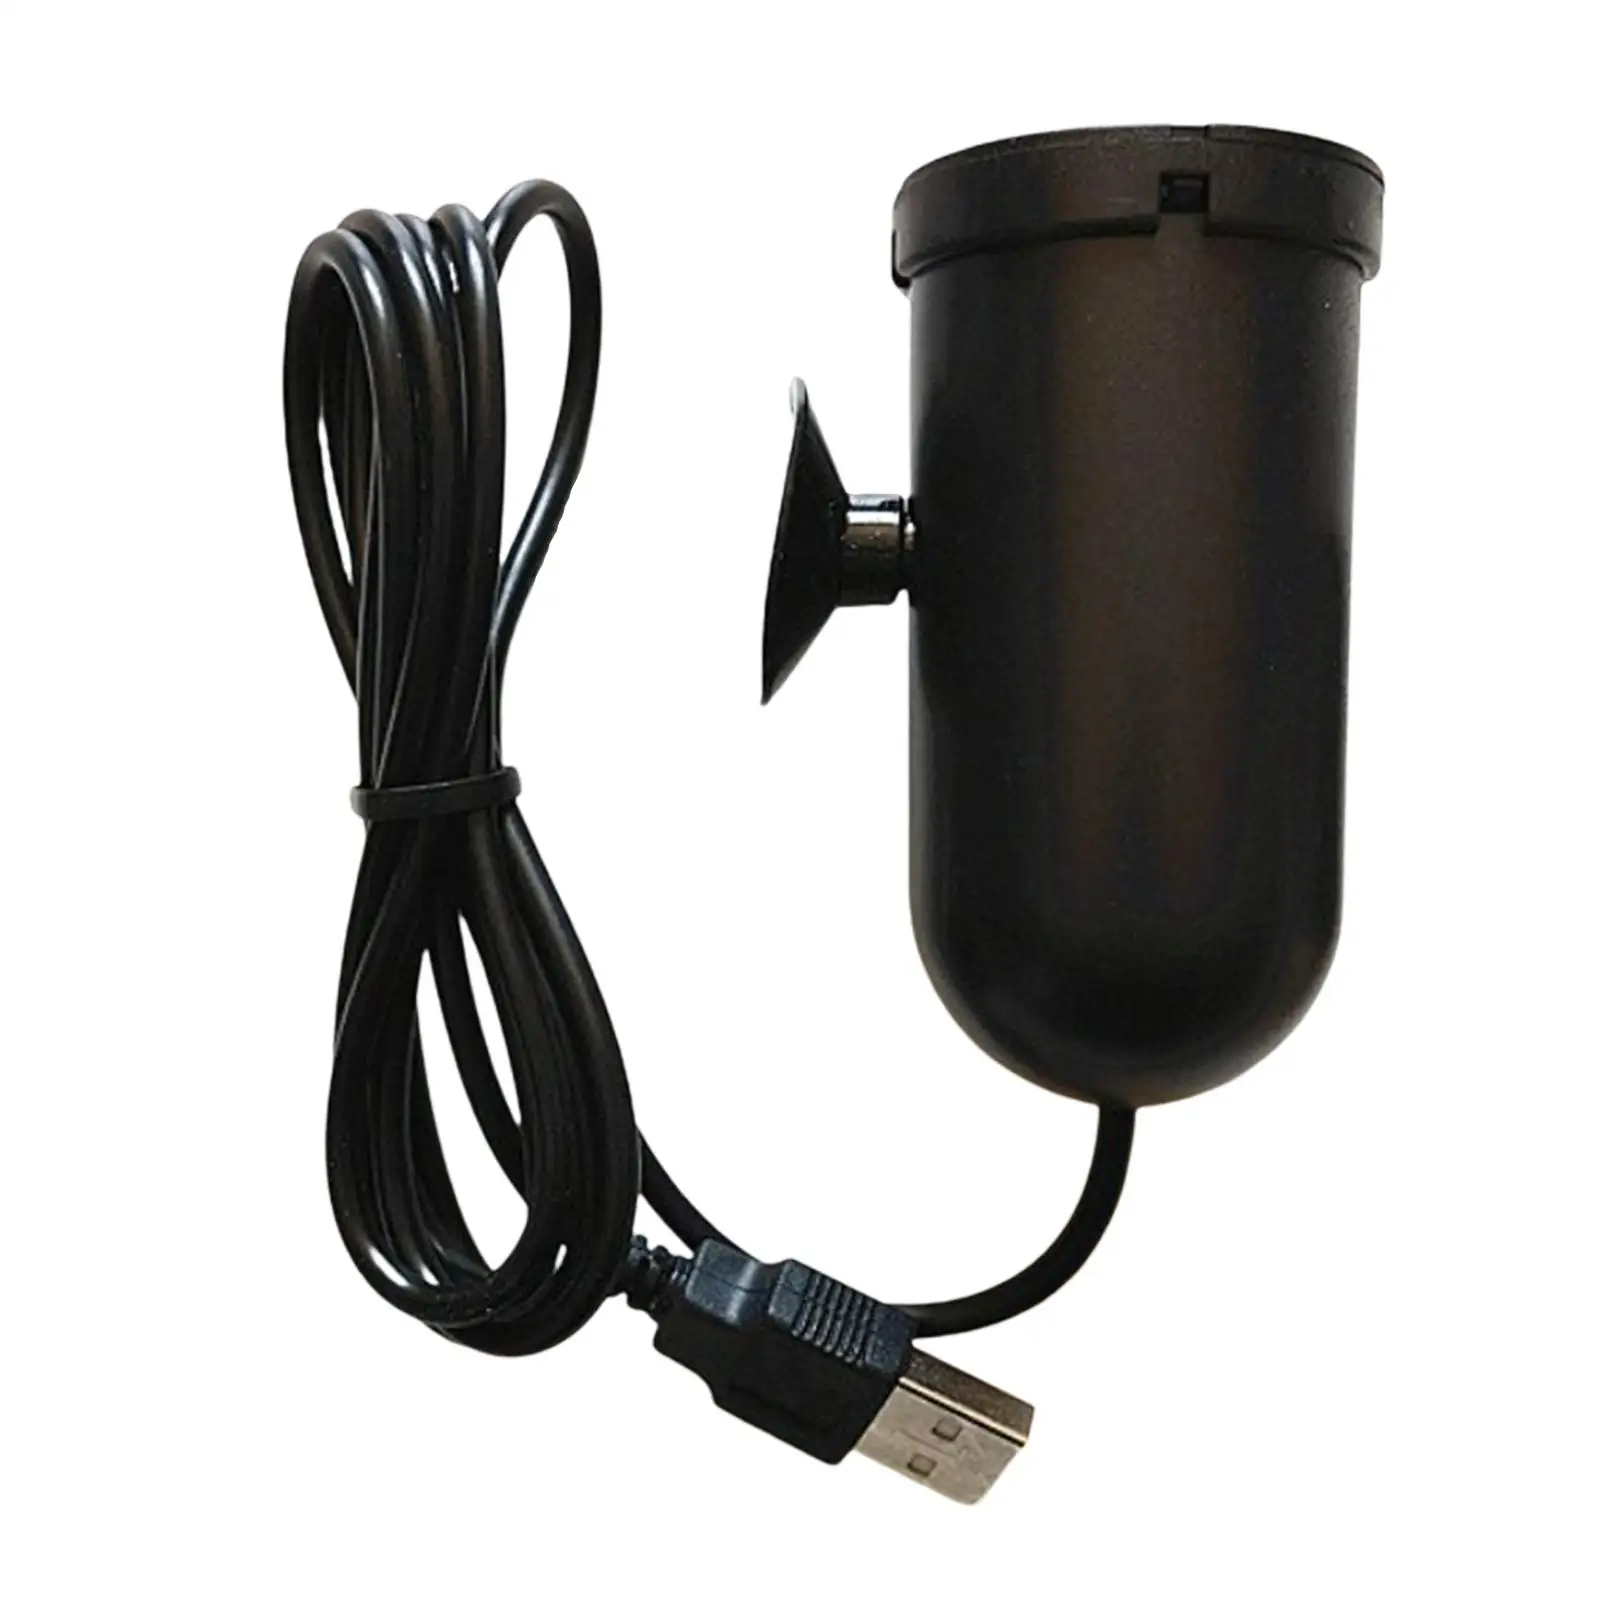 Portable USB Aquarium Oxygen Air Pump with Suction Cup Energy Saving Tool Mute for Fish Tank Fresh & Saltwater Aquariums Fishing